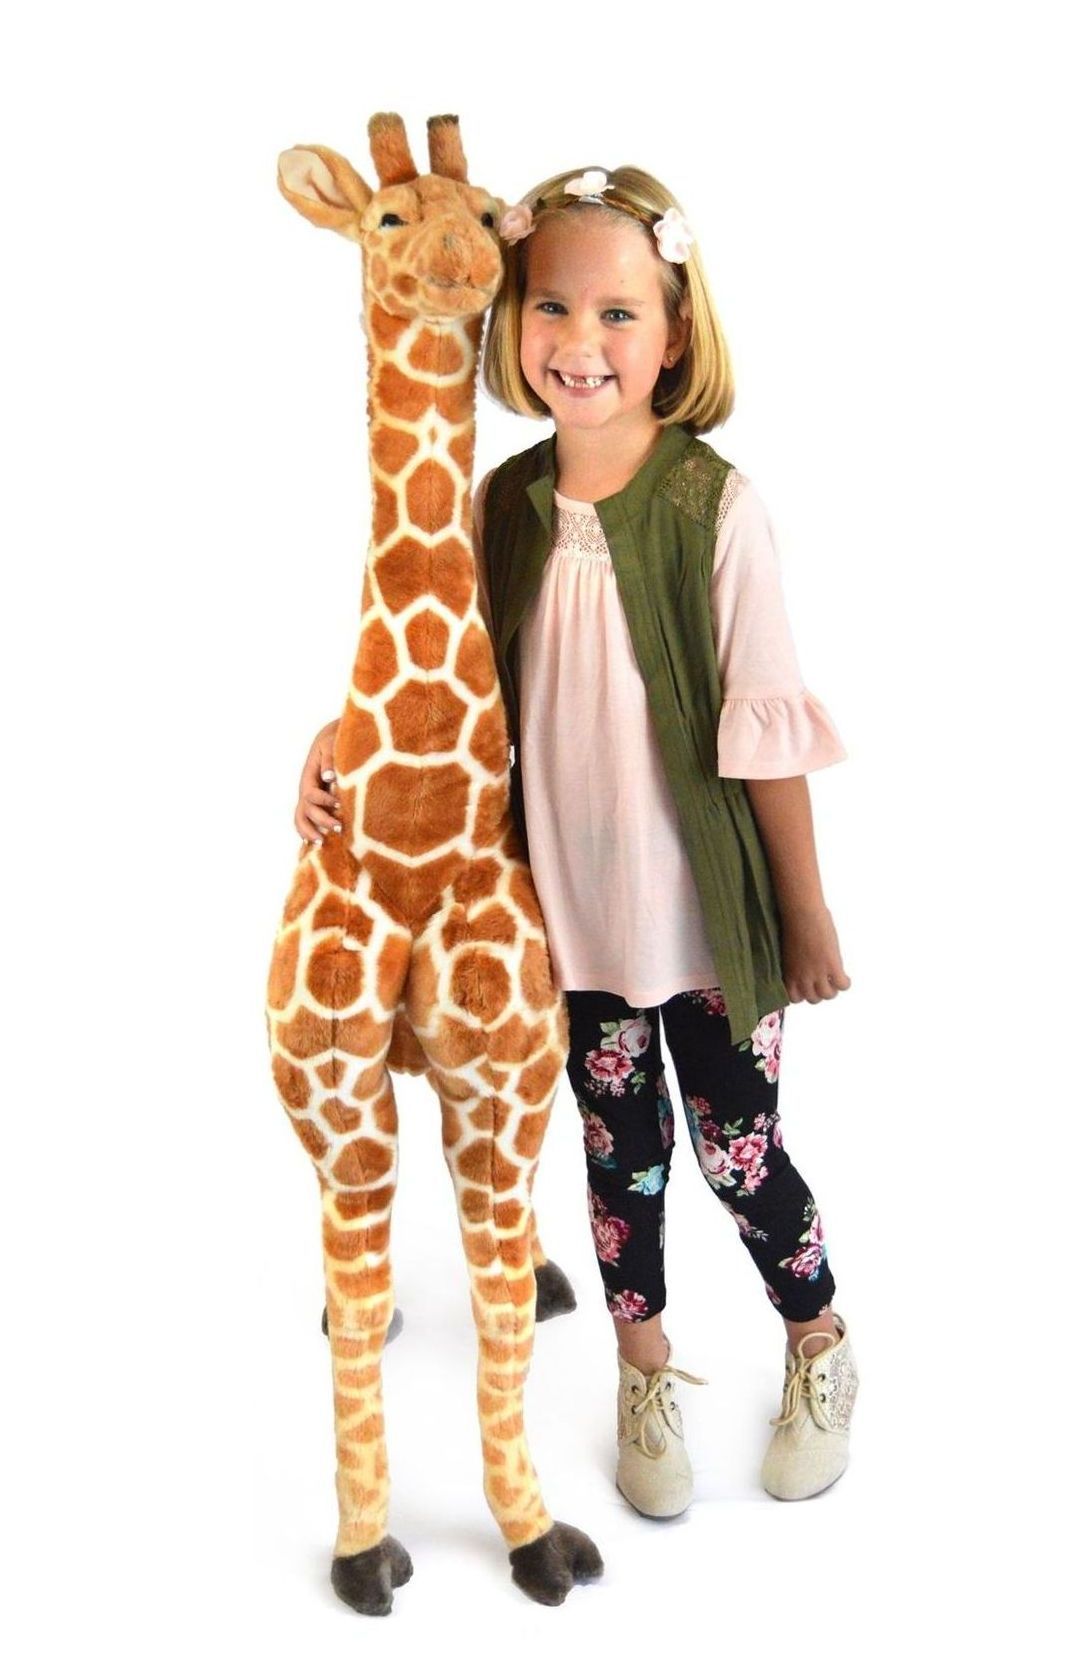 giant giraffe plush toy